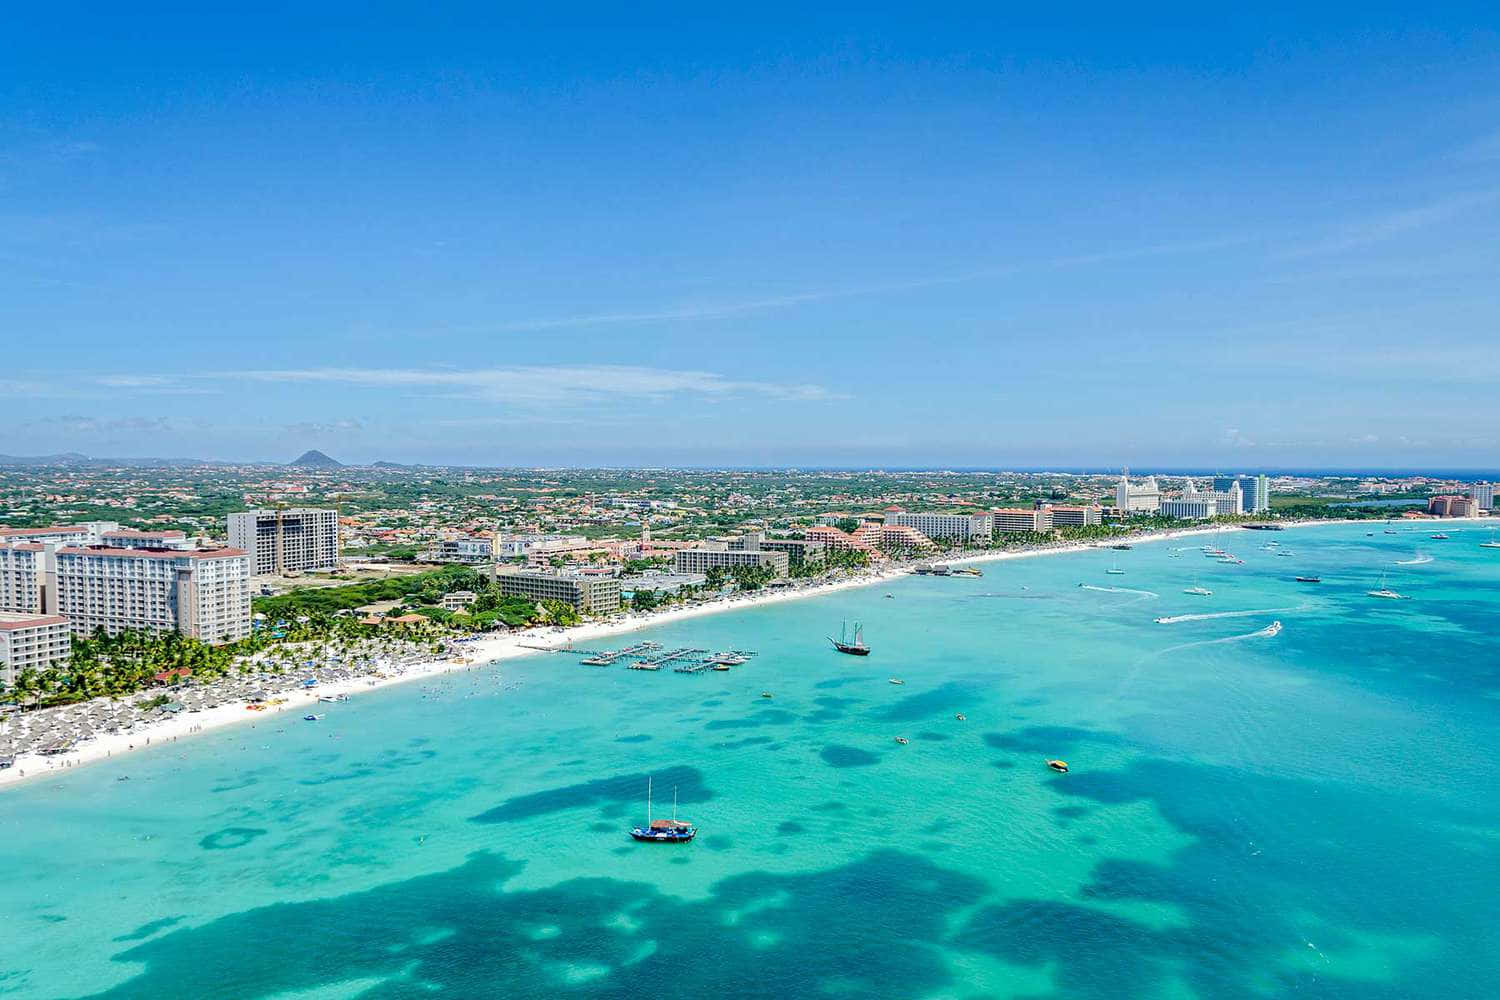 Aruba Beach Aerial View Pictures